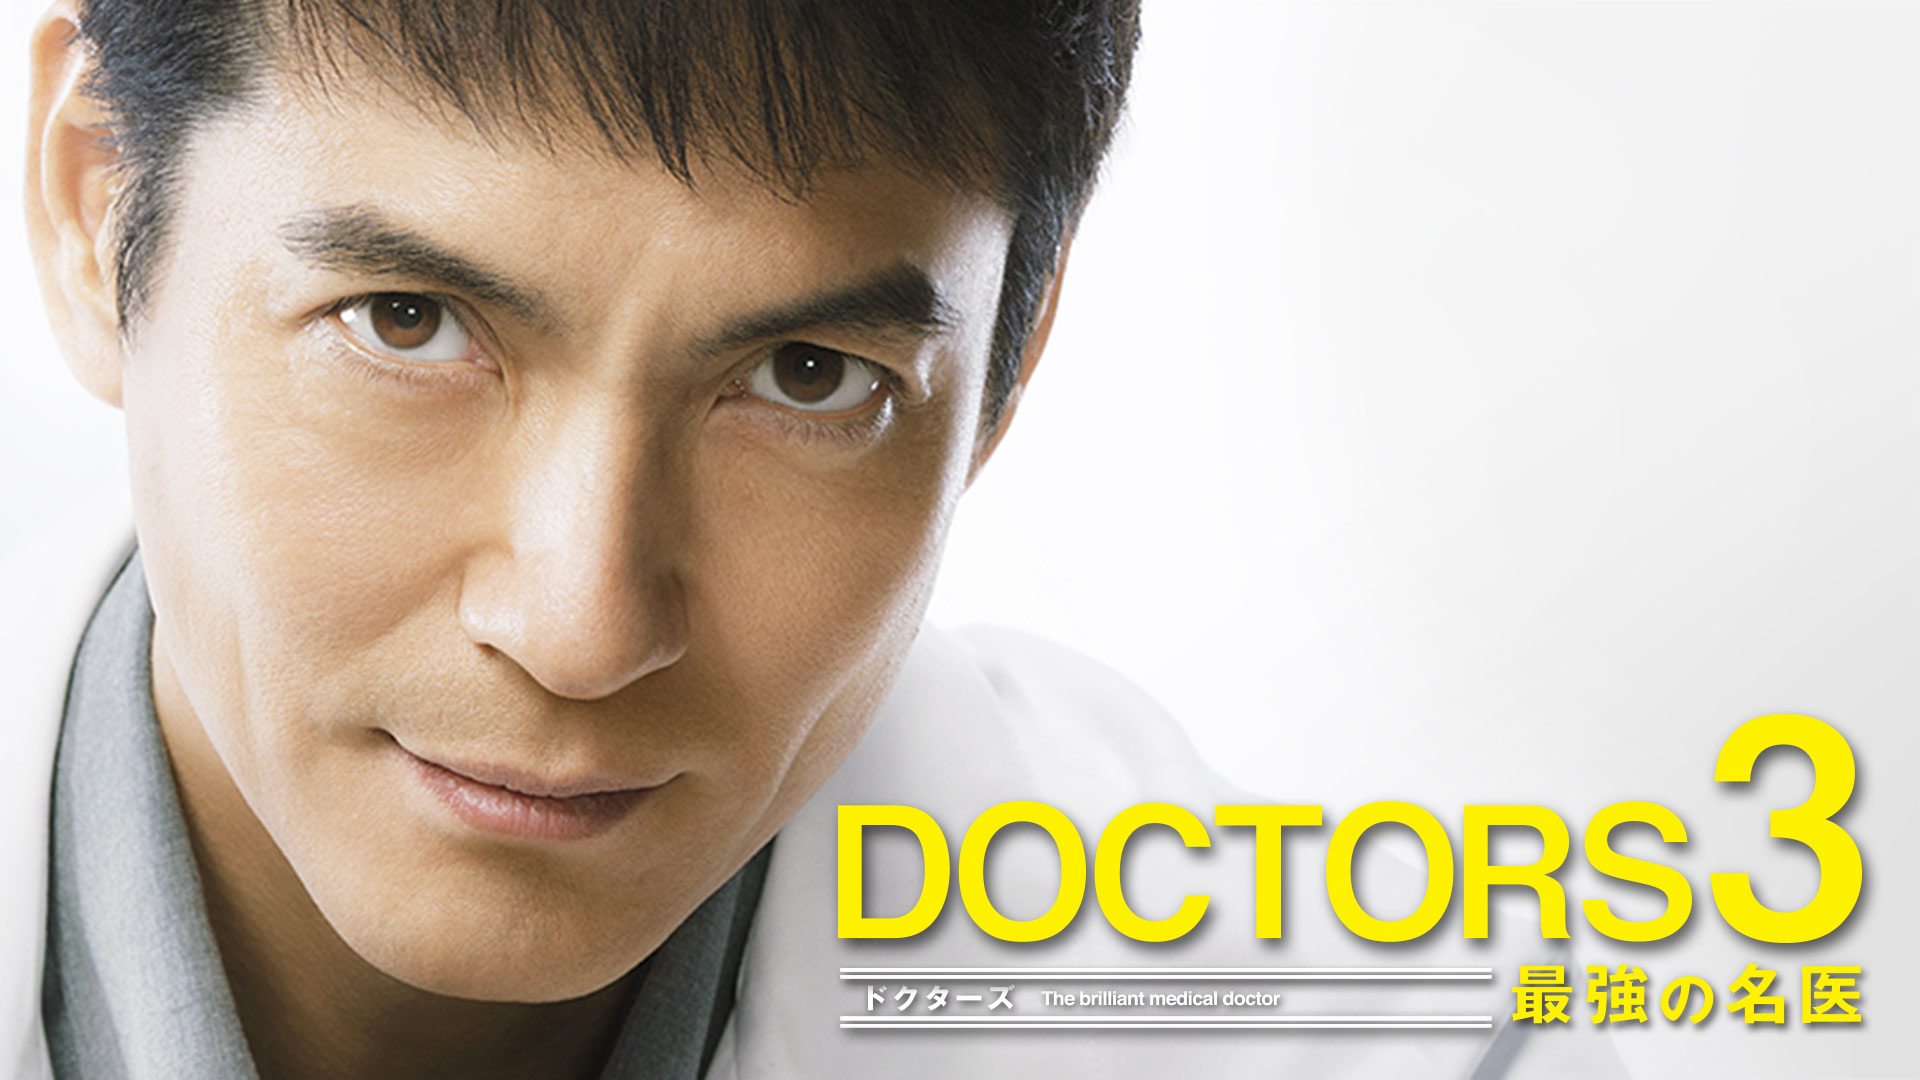 DOCTORS-最強の名医- DVDシリーズ全16巻 - TVドラマ